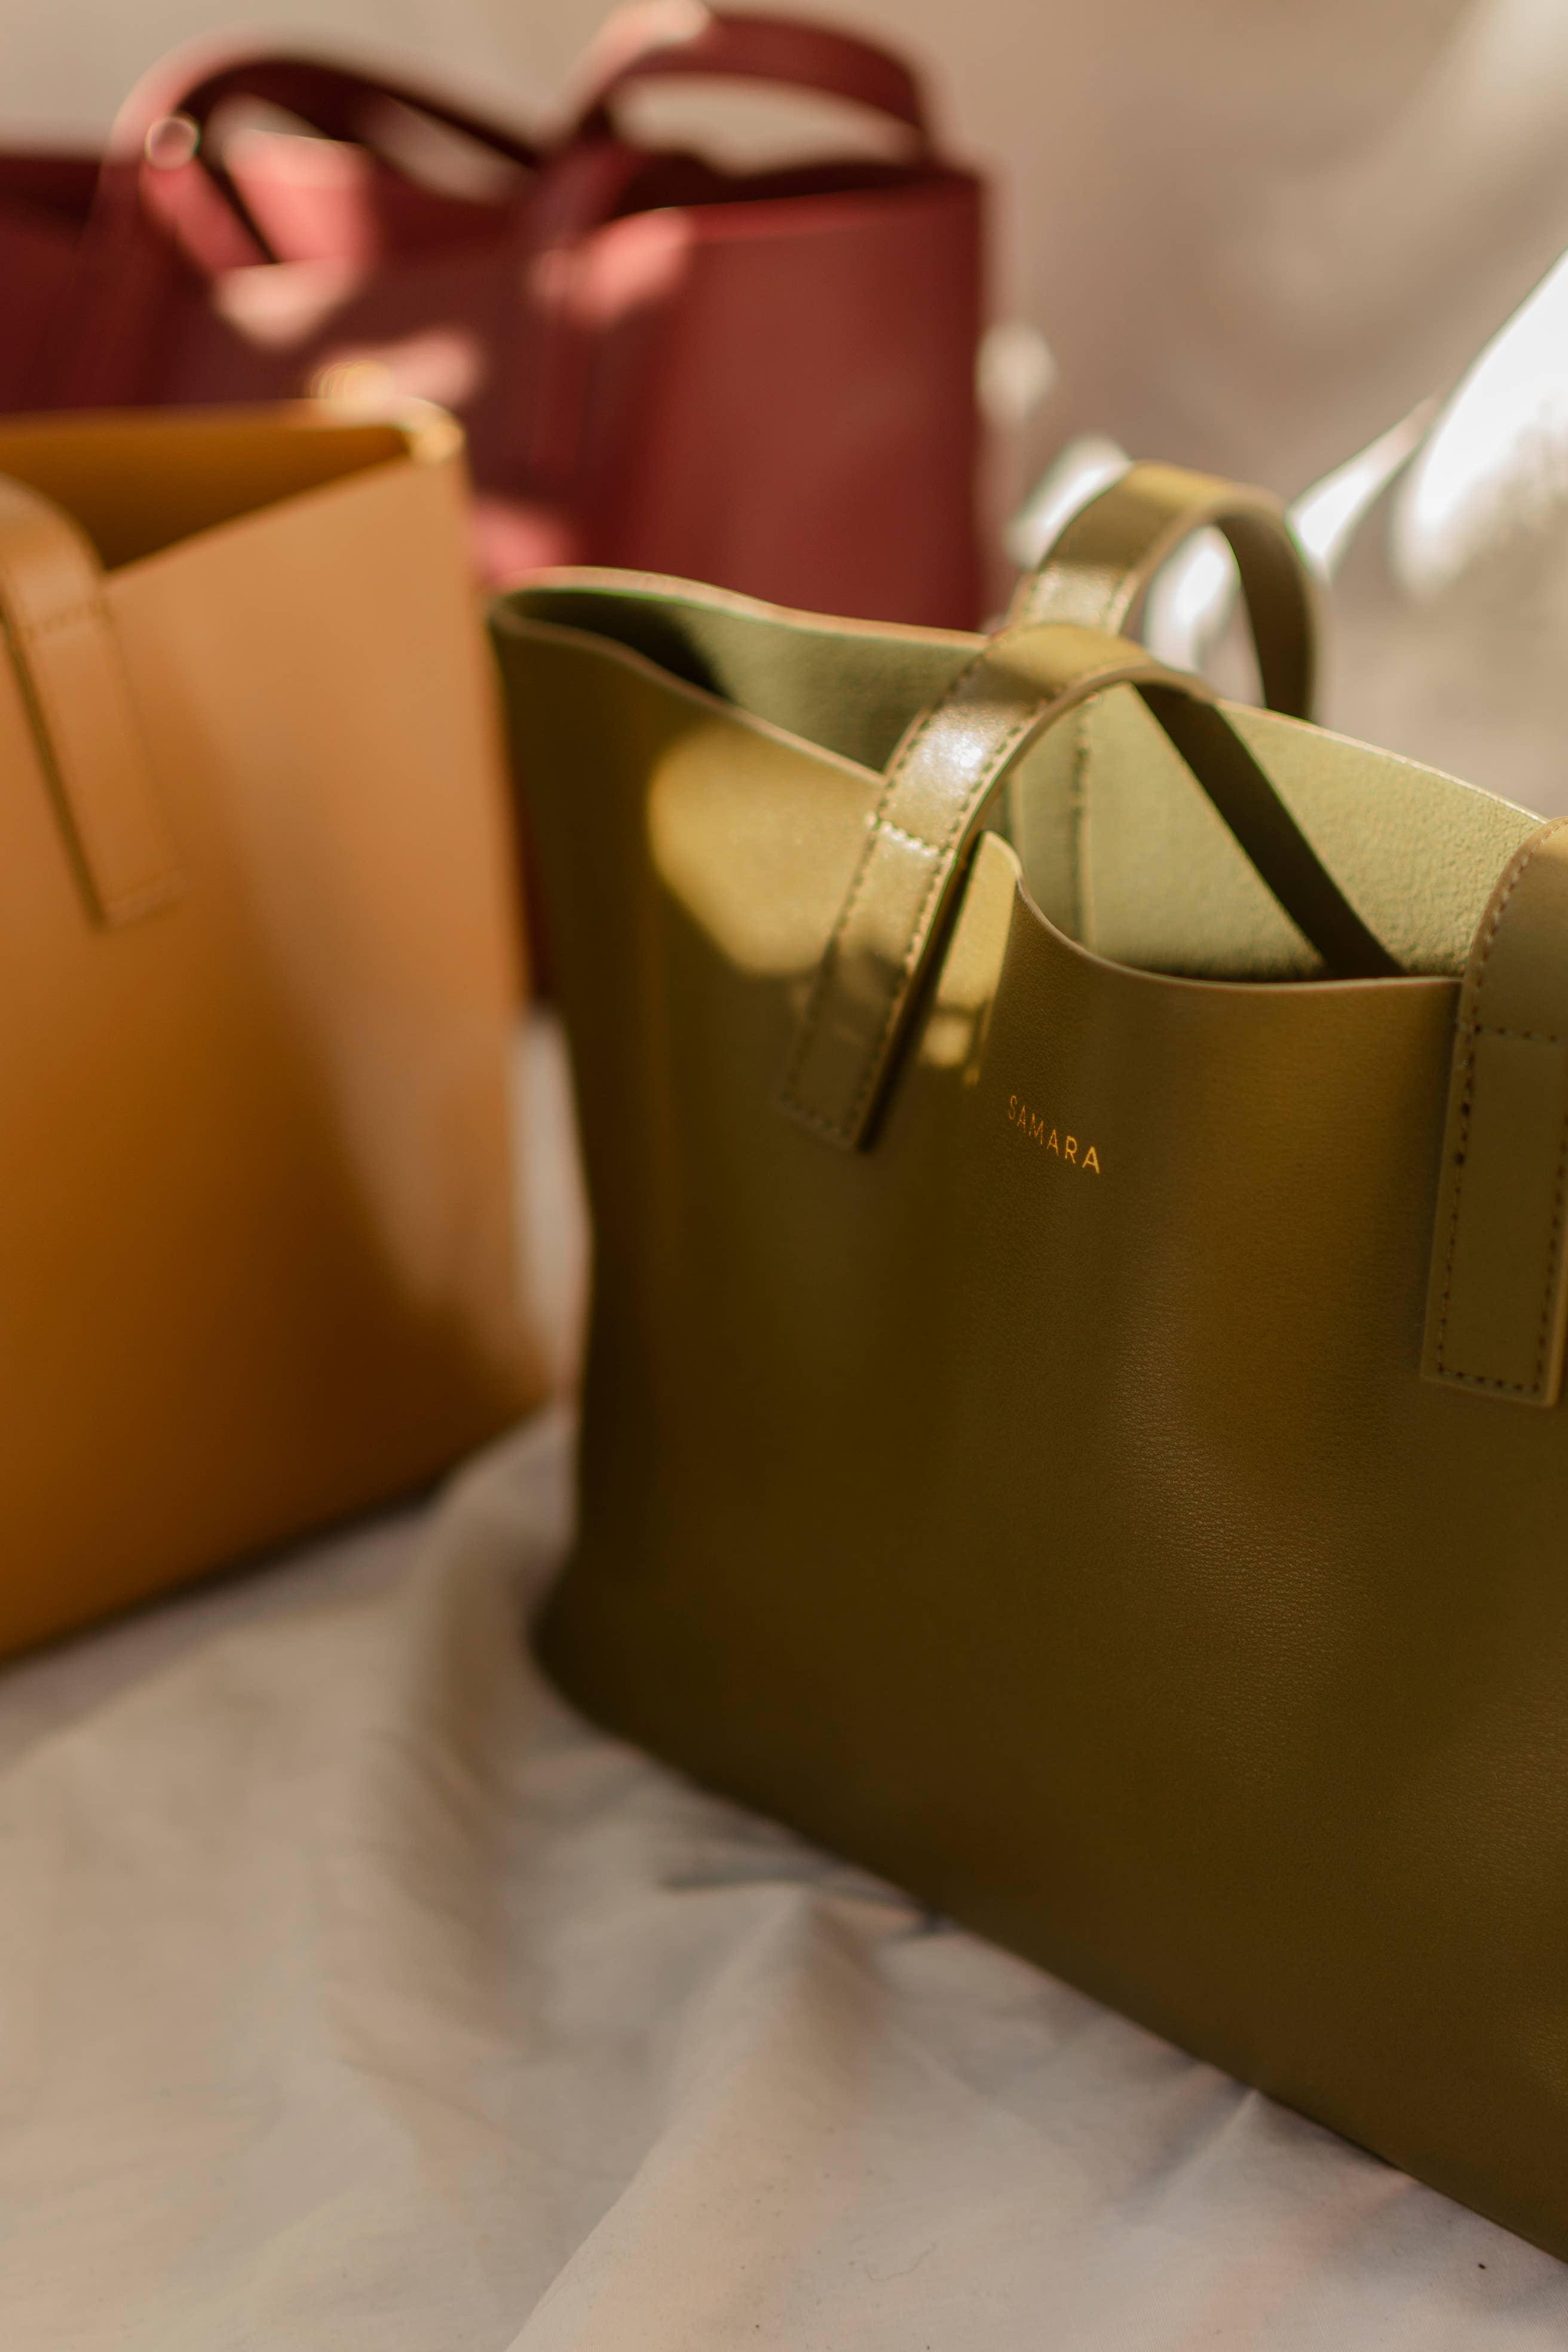 Samara Shoulder Bag Brand New In Original Plastic for Sale in